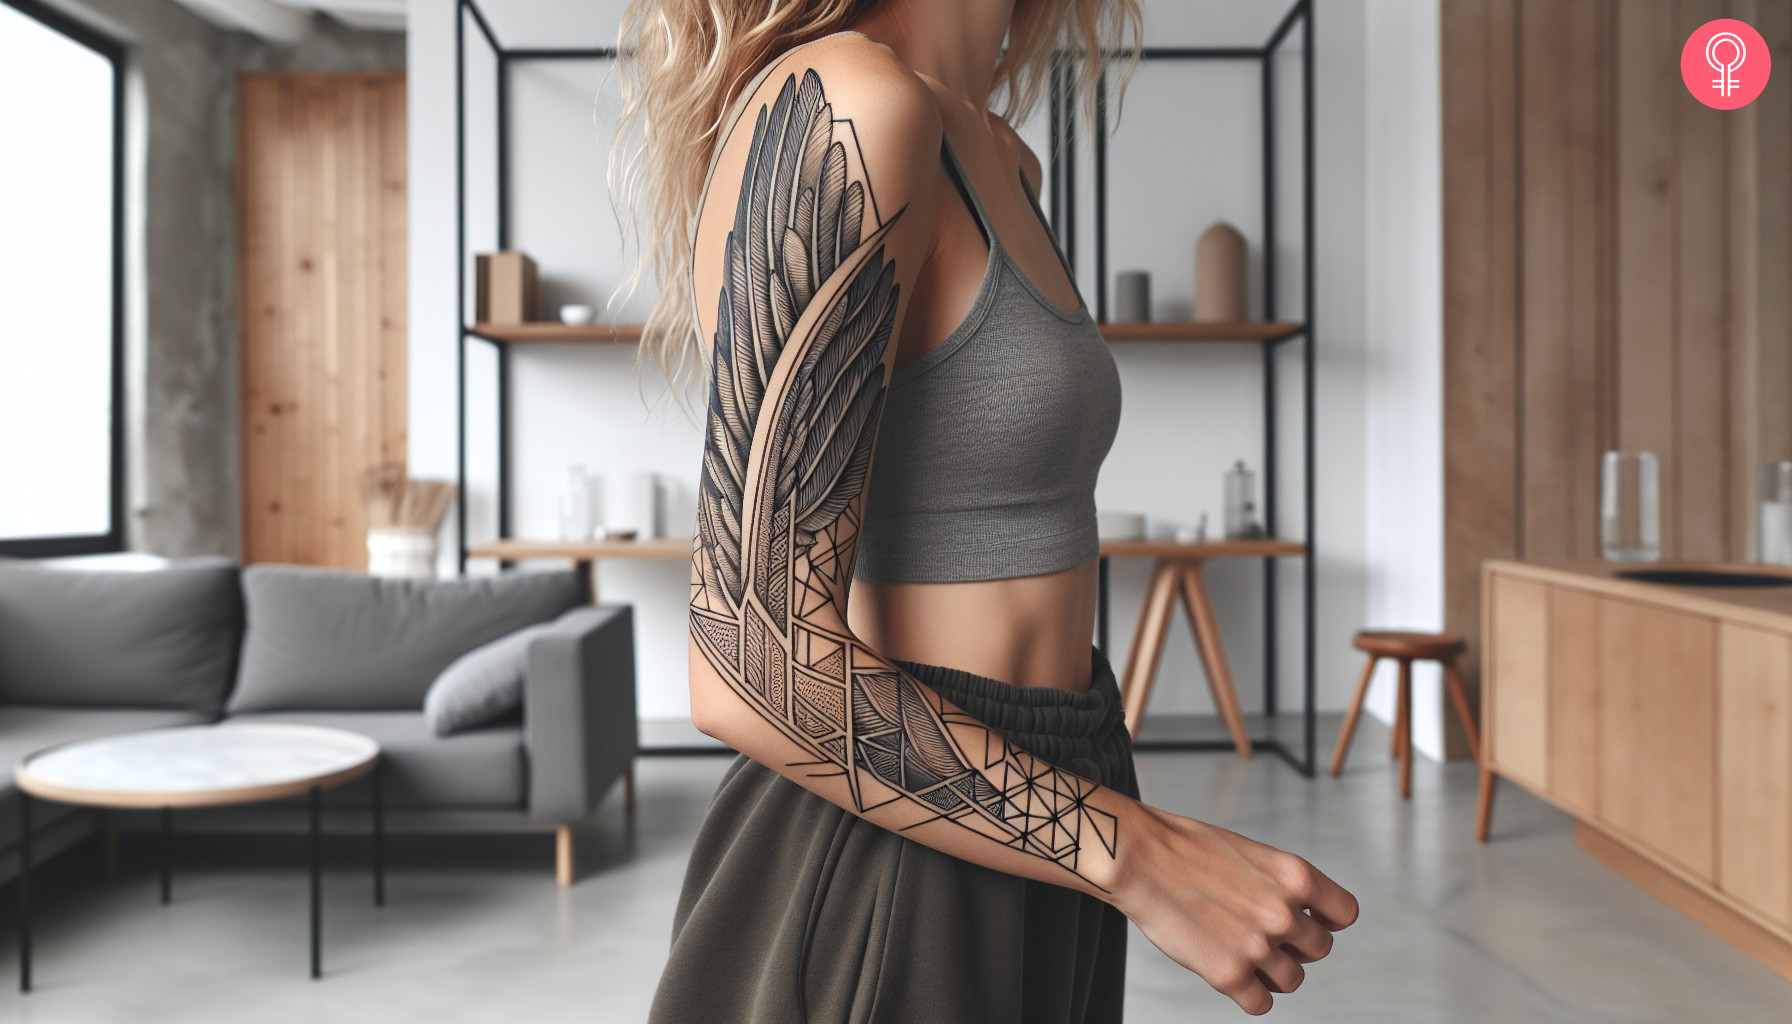 A geometric hermes tattoo on the sleeve of a woman